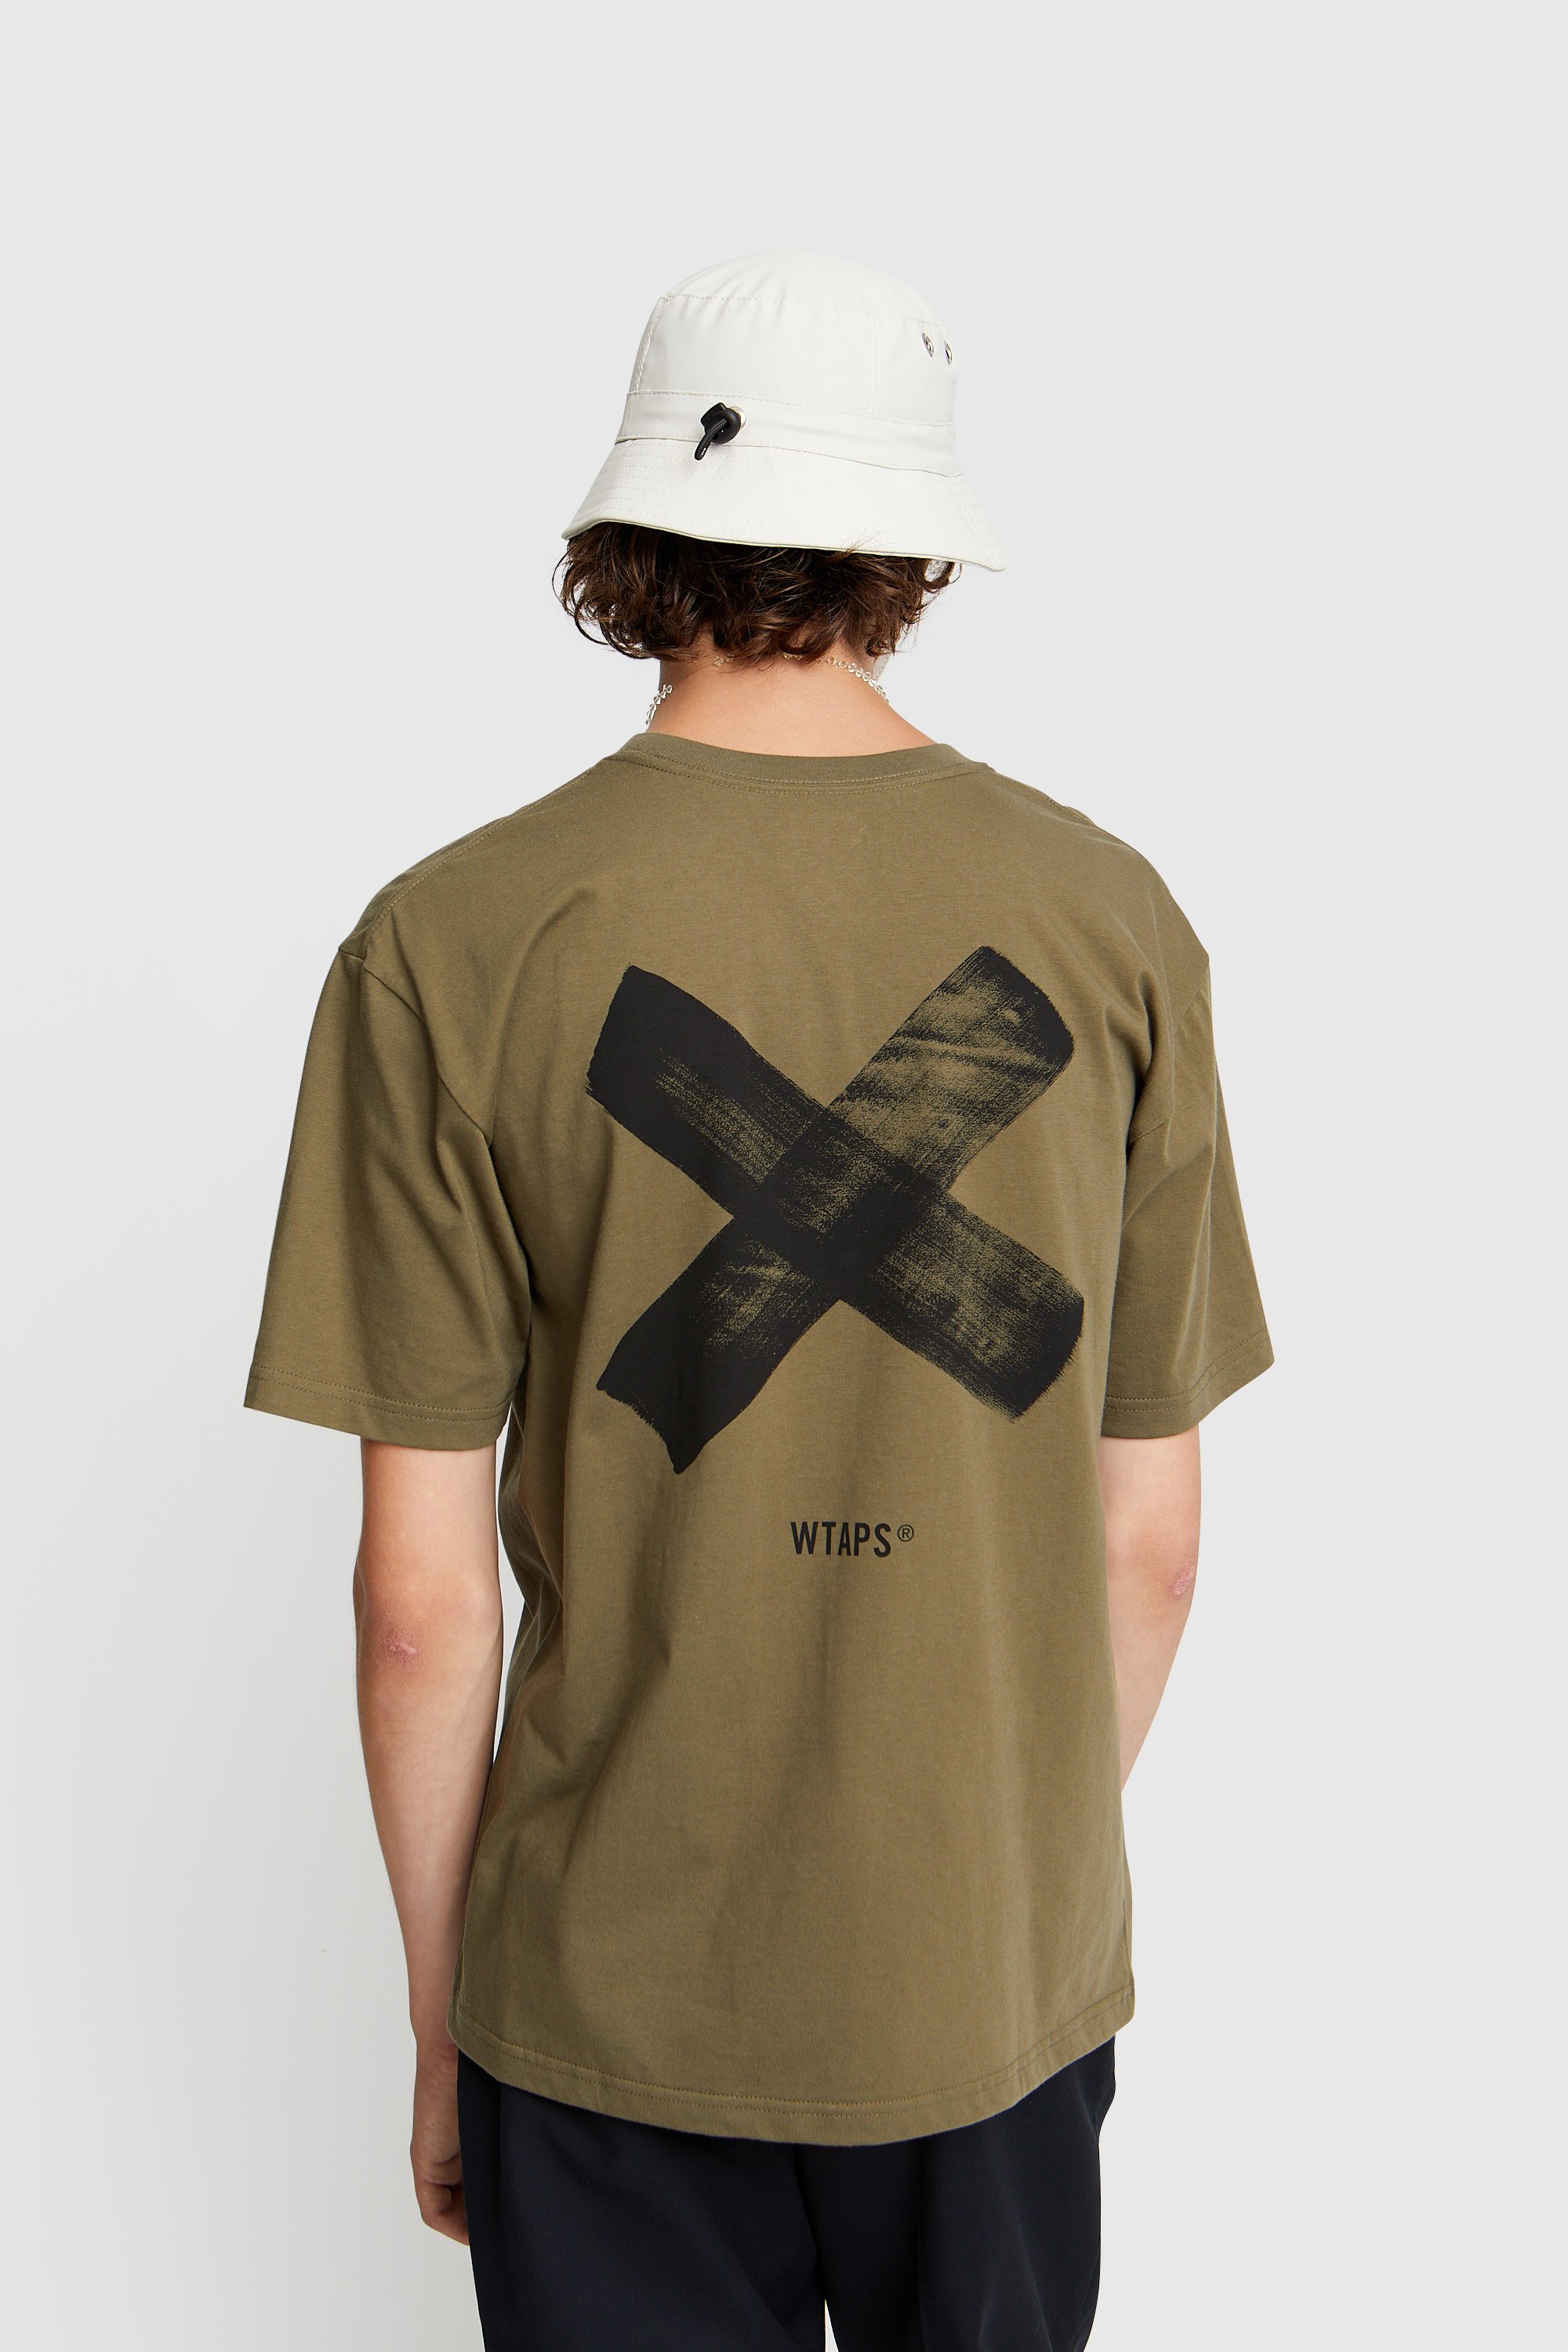 WTAPS MMXX T-shirt Olive drab | WoodWood.com